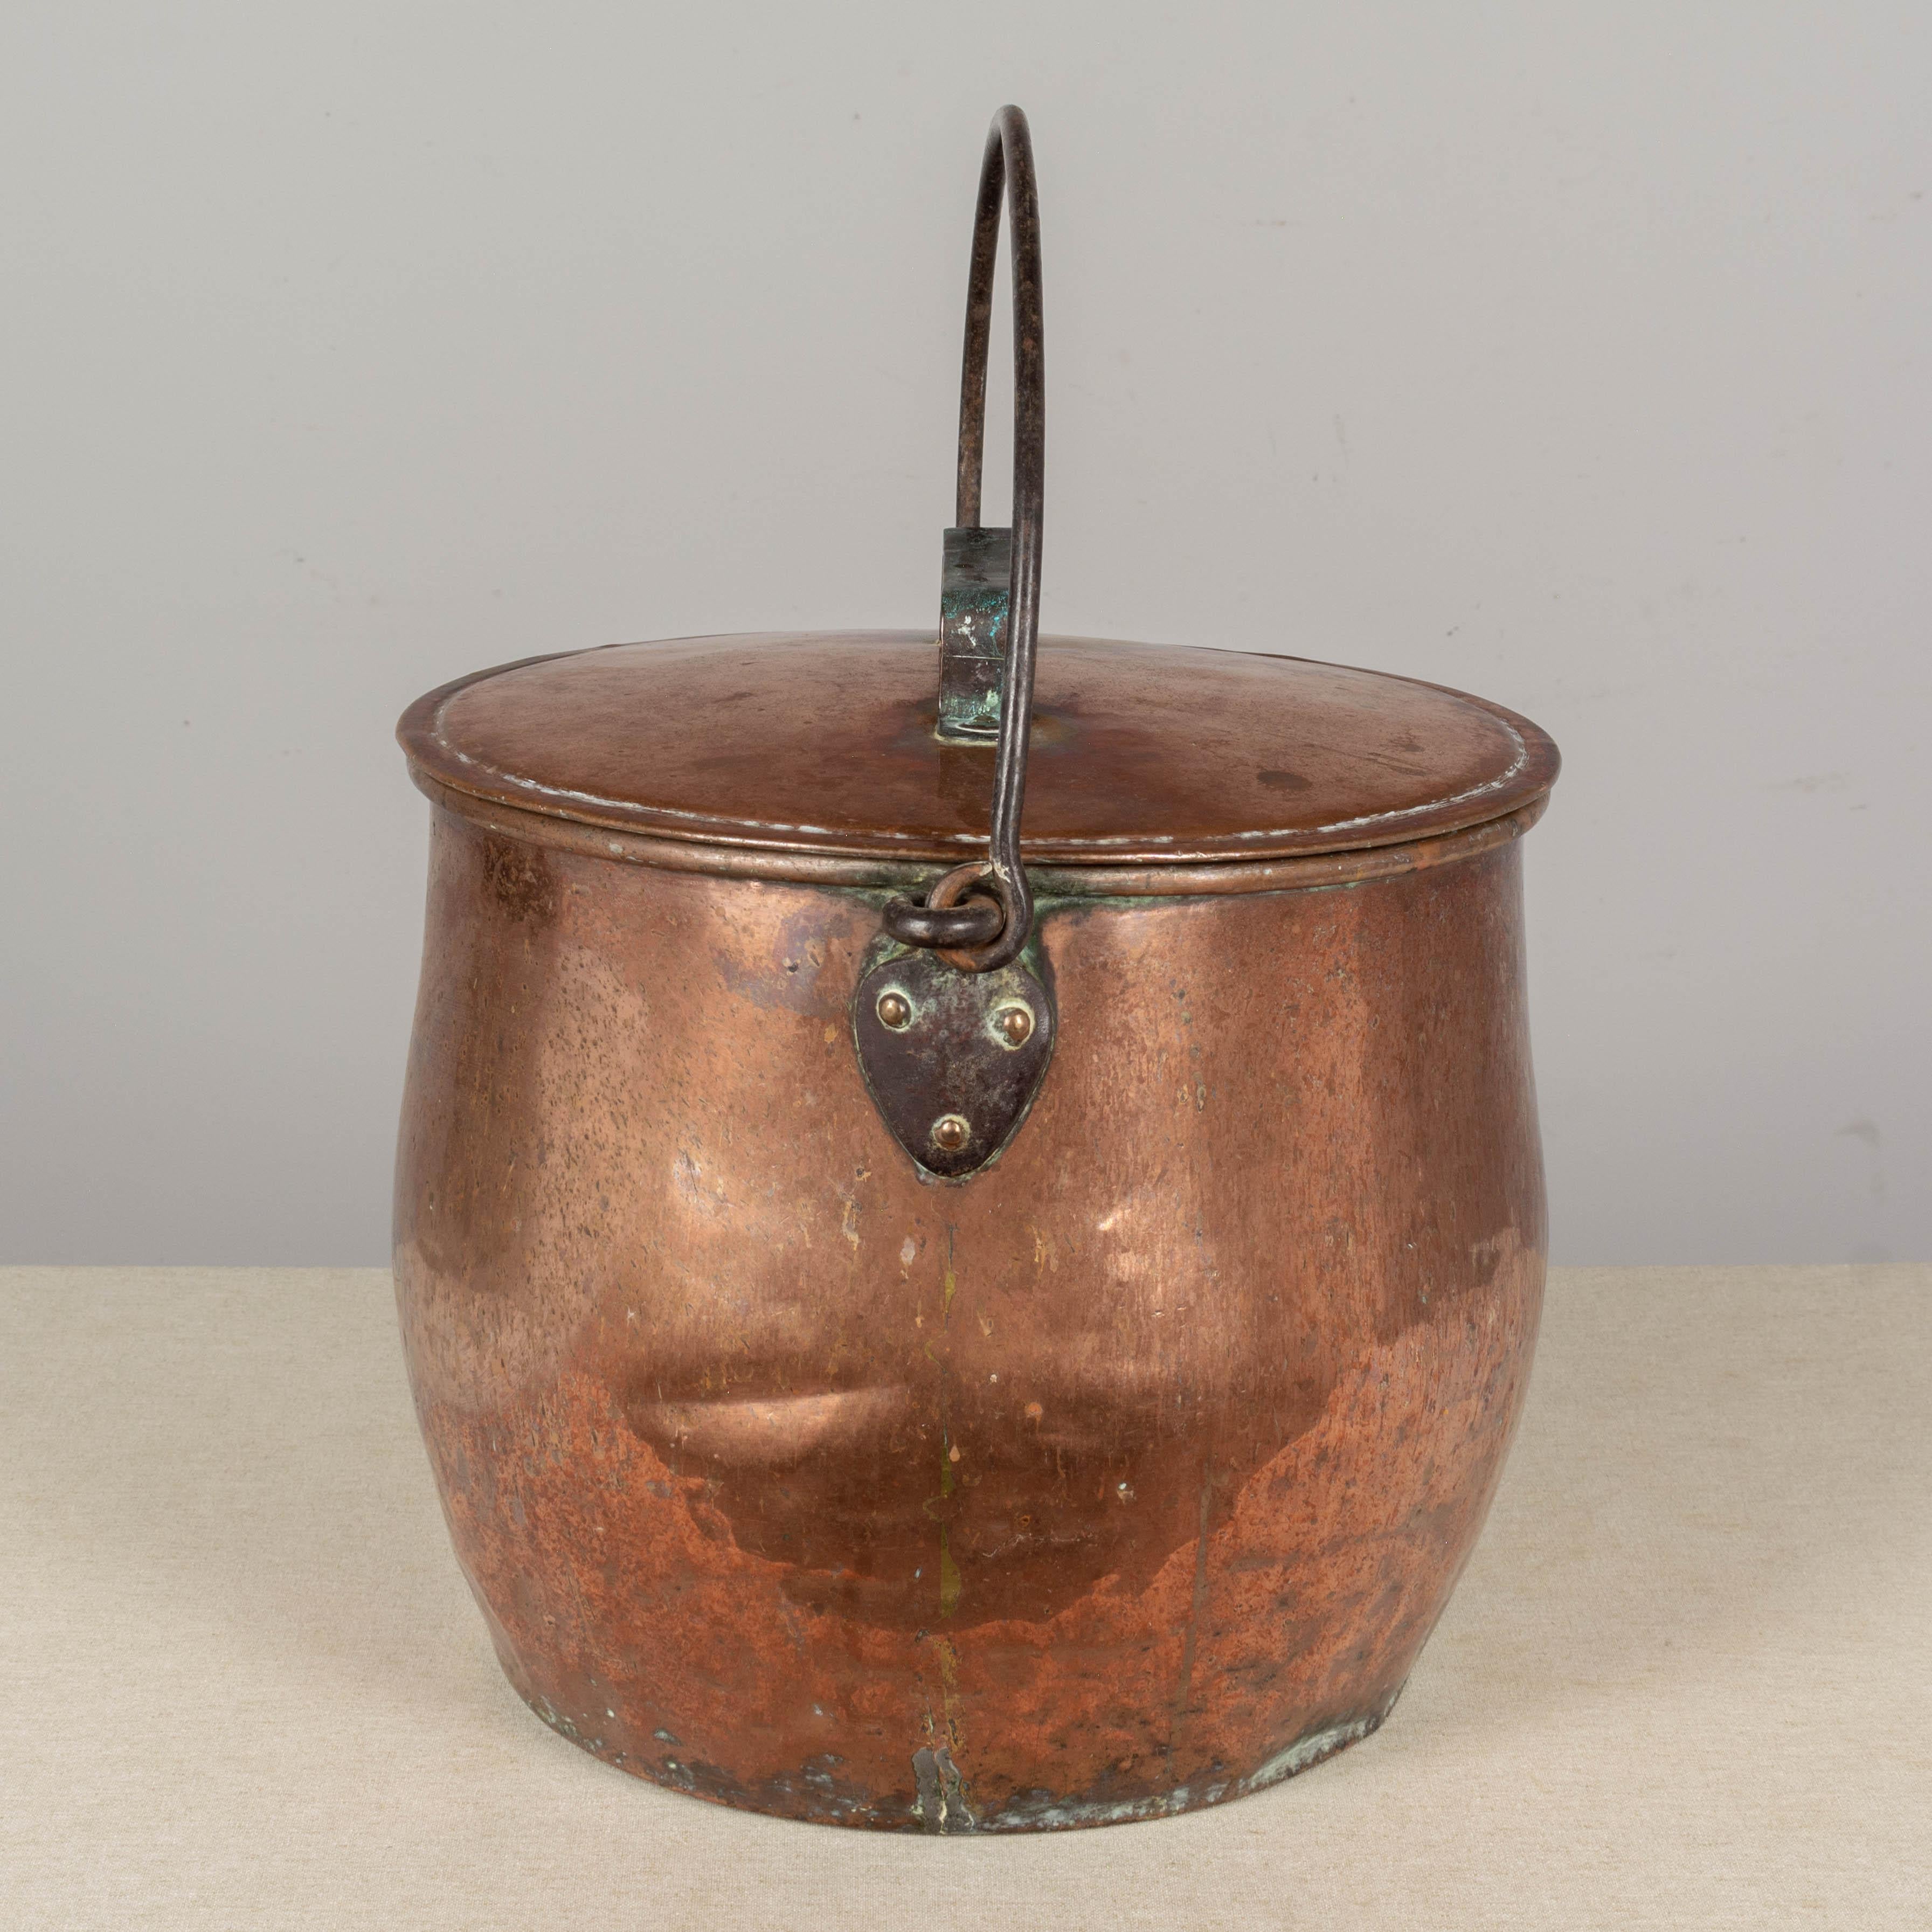 Großer kupferfarbener Stocktopf oder Cauldron aus dem 19. Jahrhundert (Kupfer) im Angebot